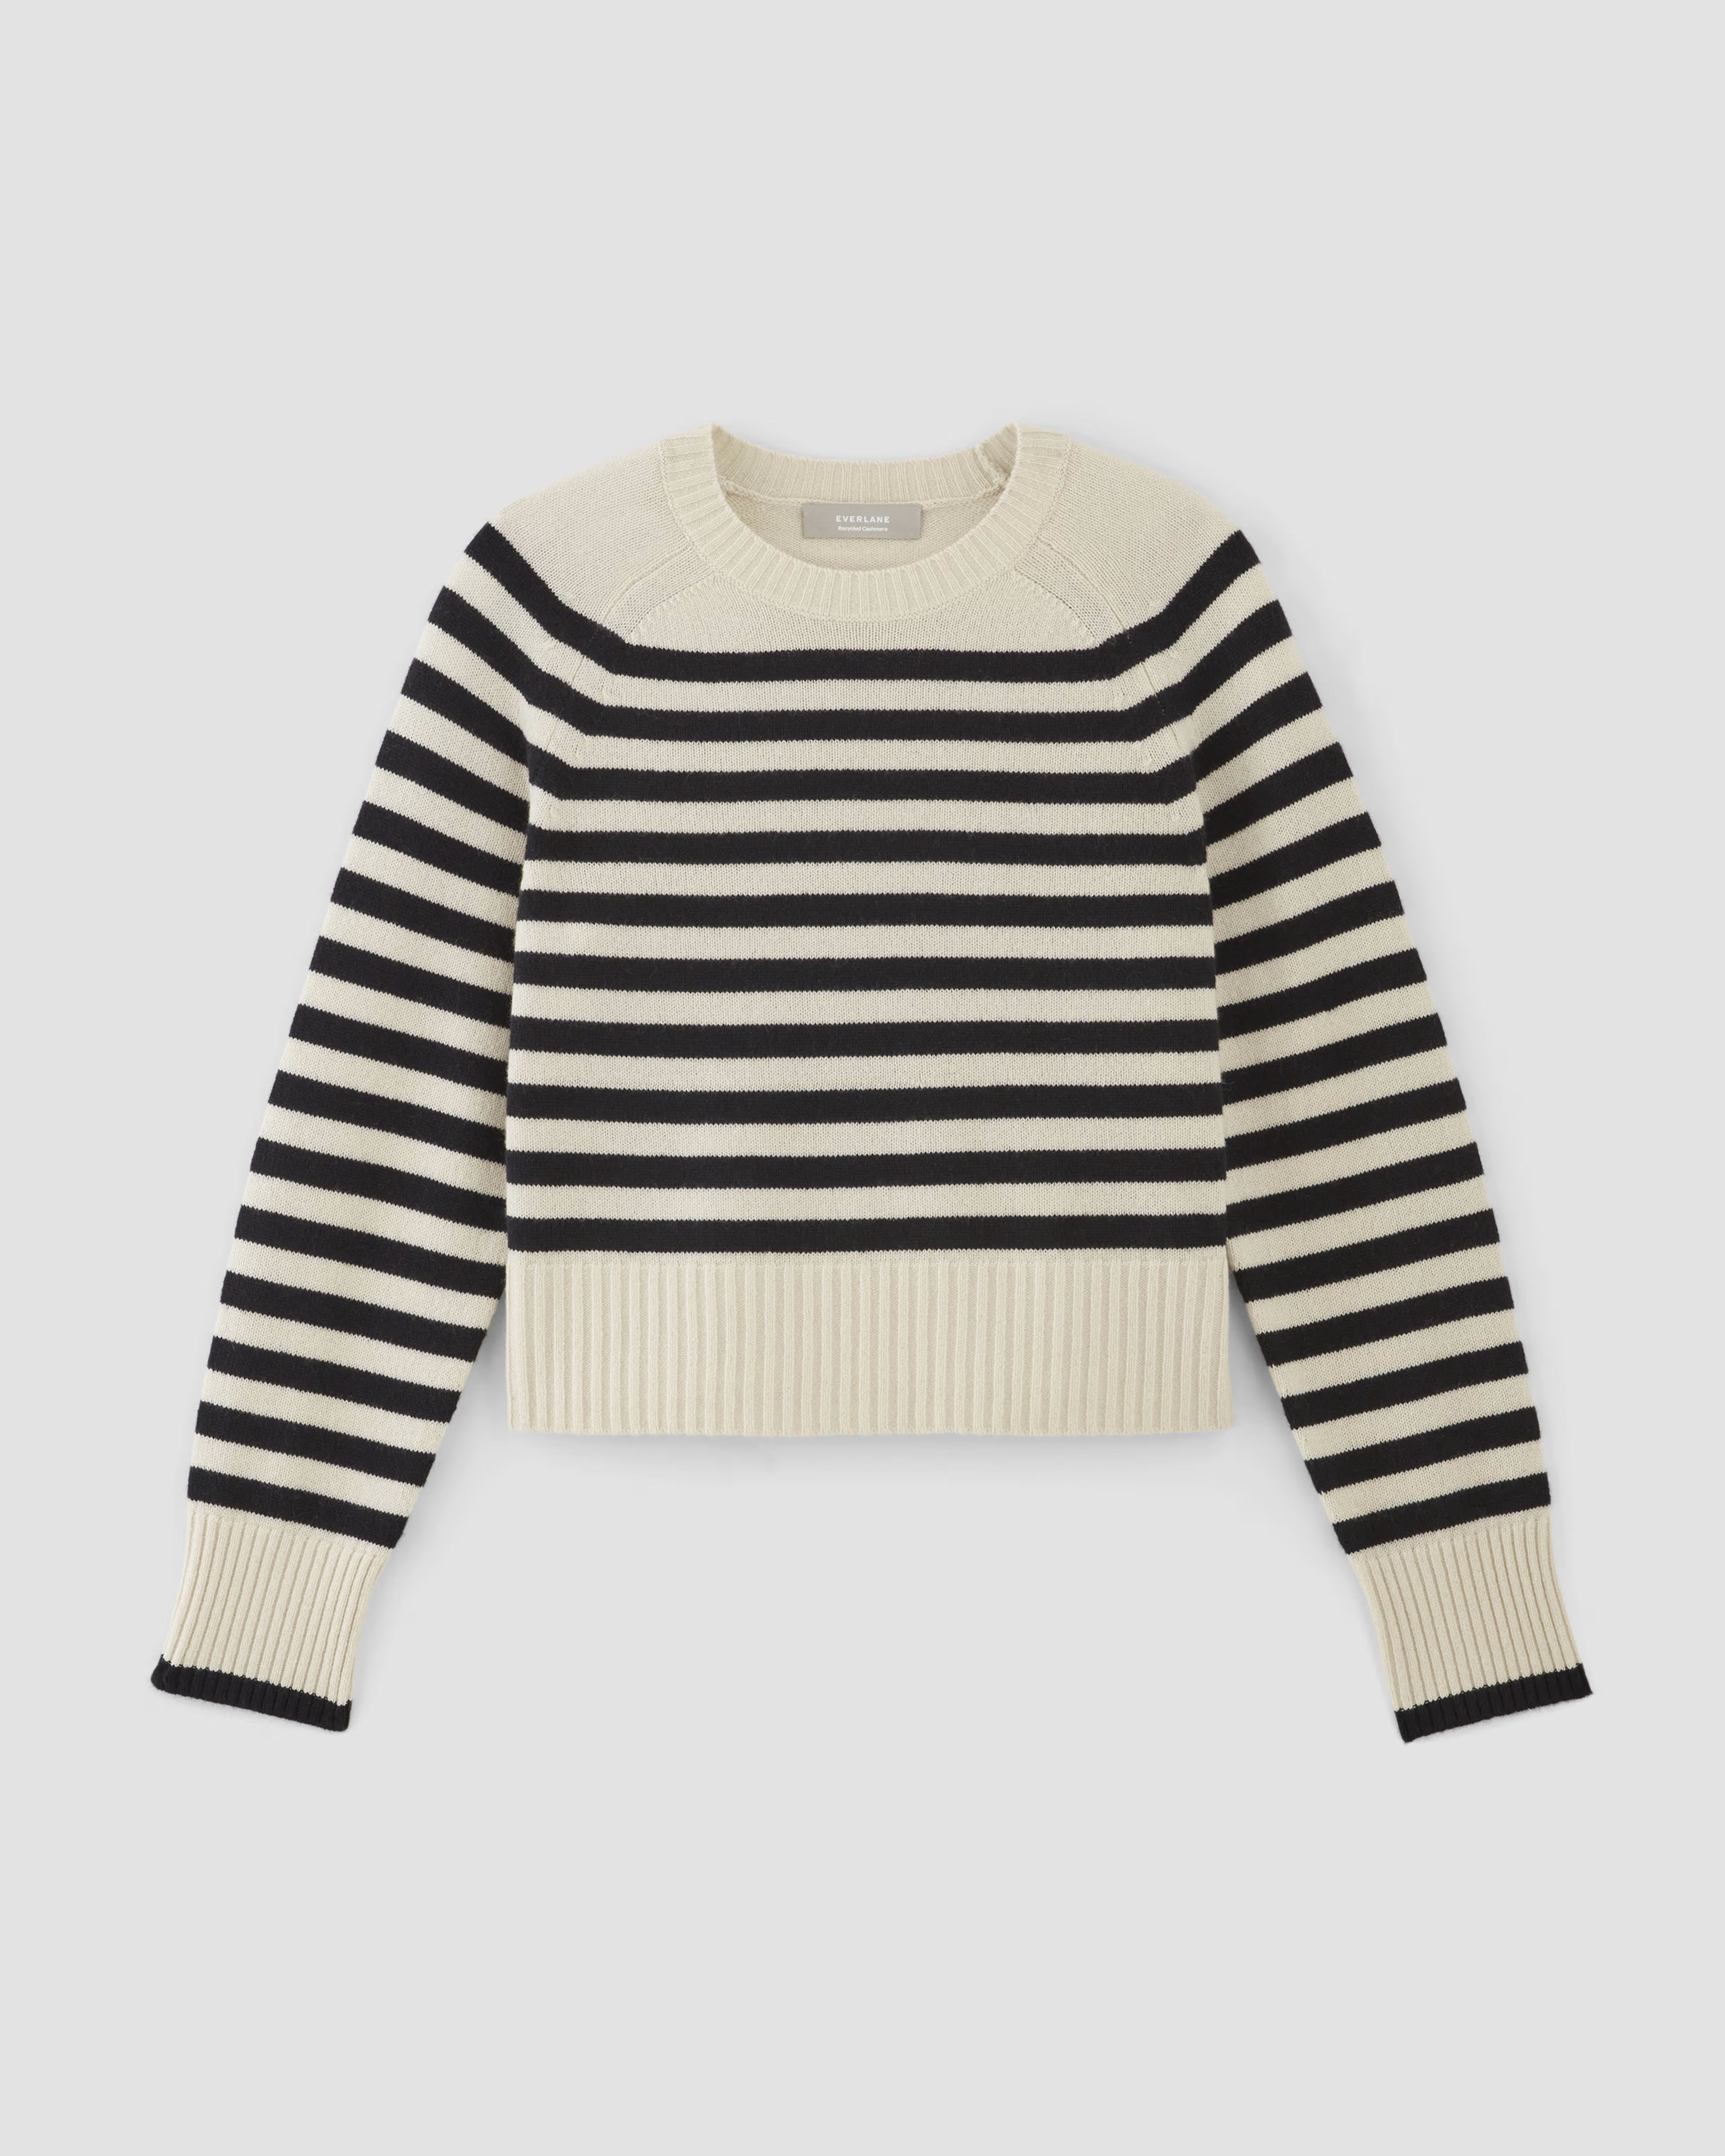 The Cashmere Boxy Crew Sweater | Everlane